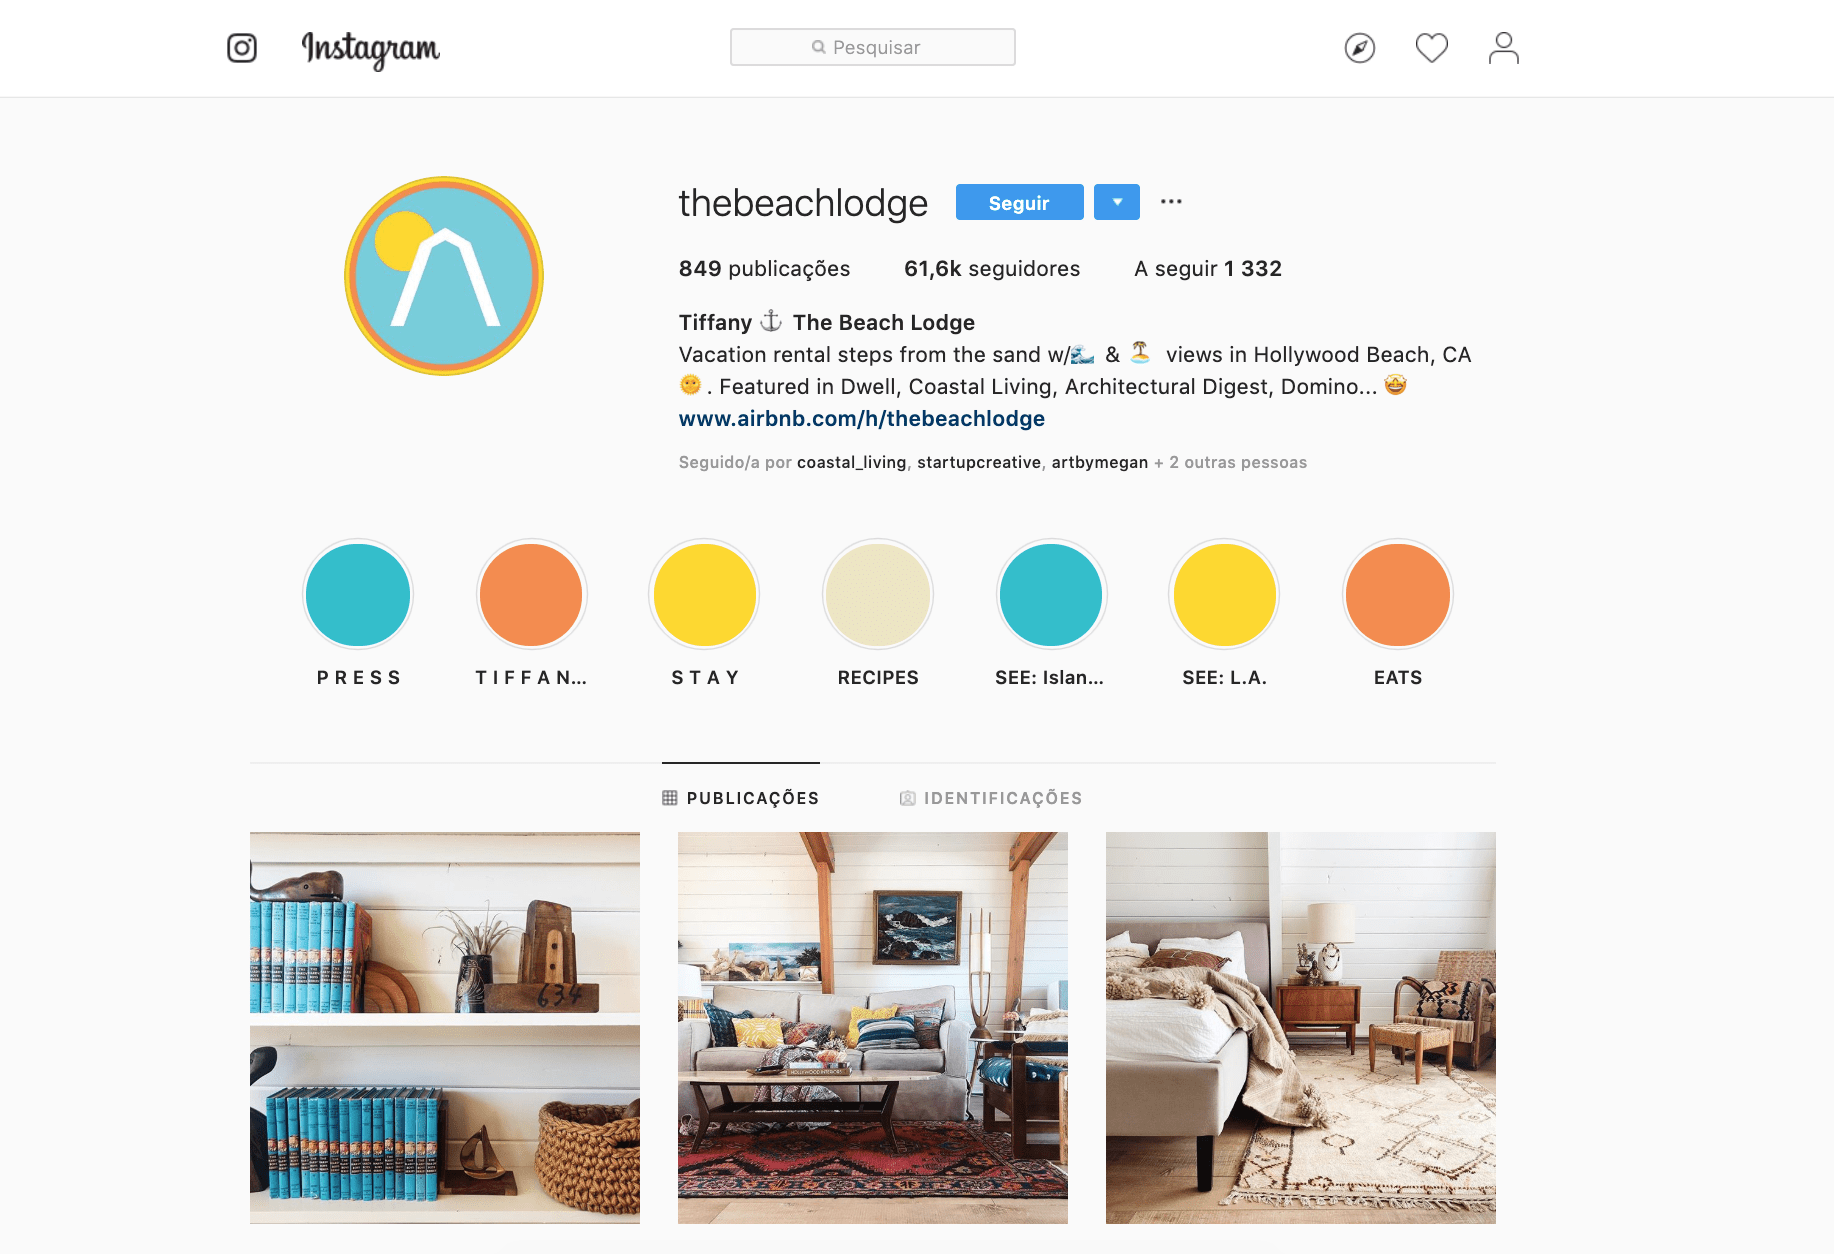 airbnb instagram account